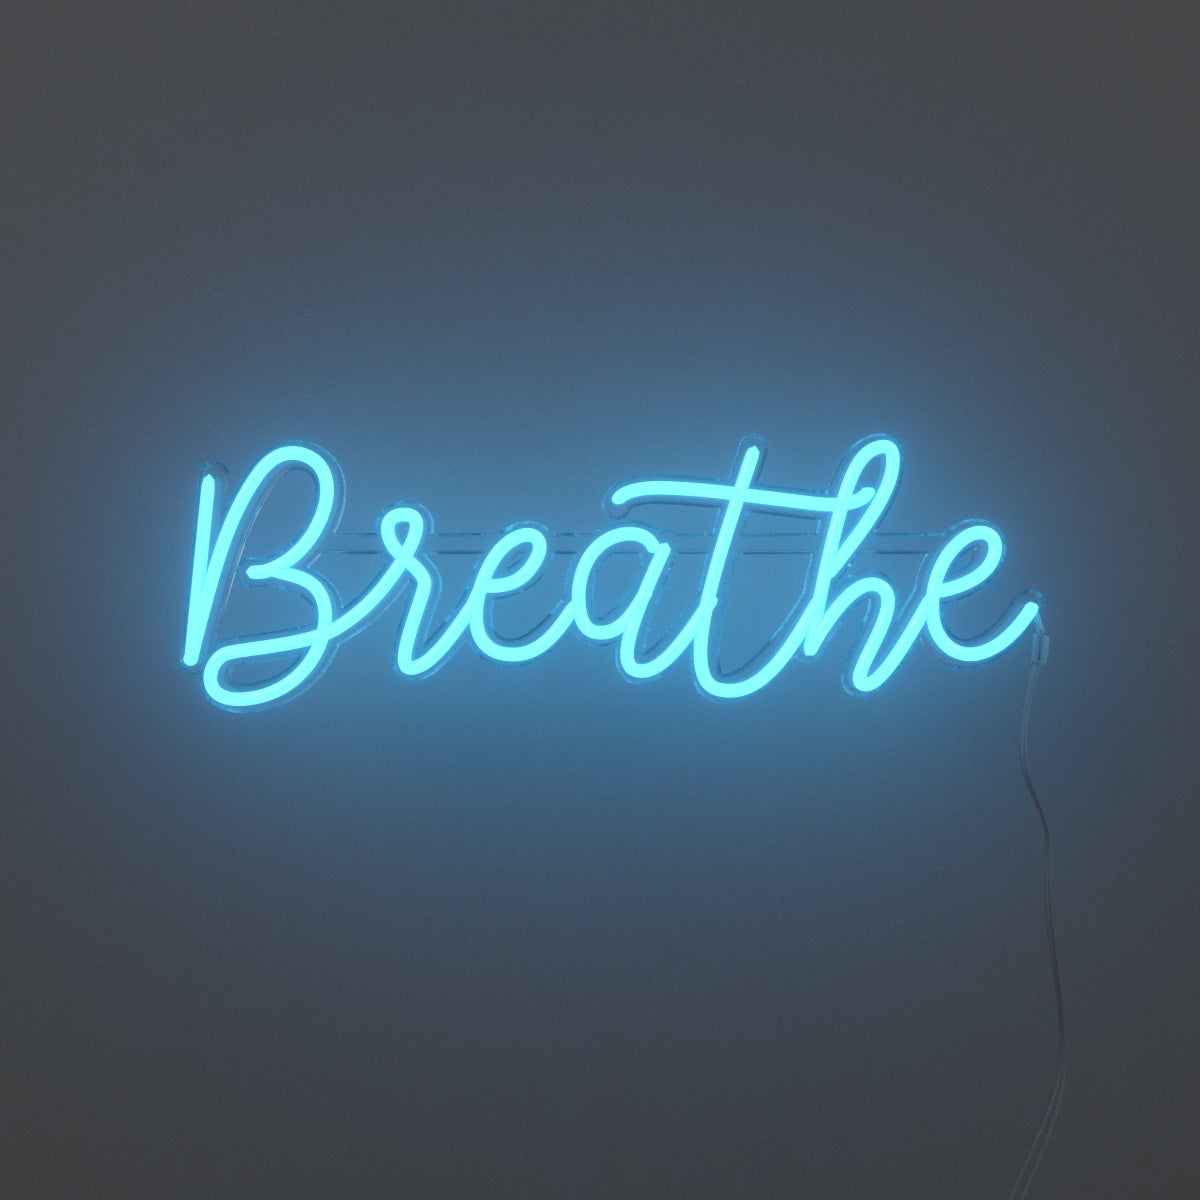 Breathe - Neon Tabela - Neonbir